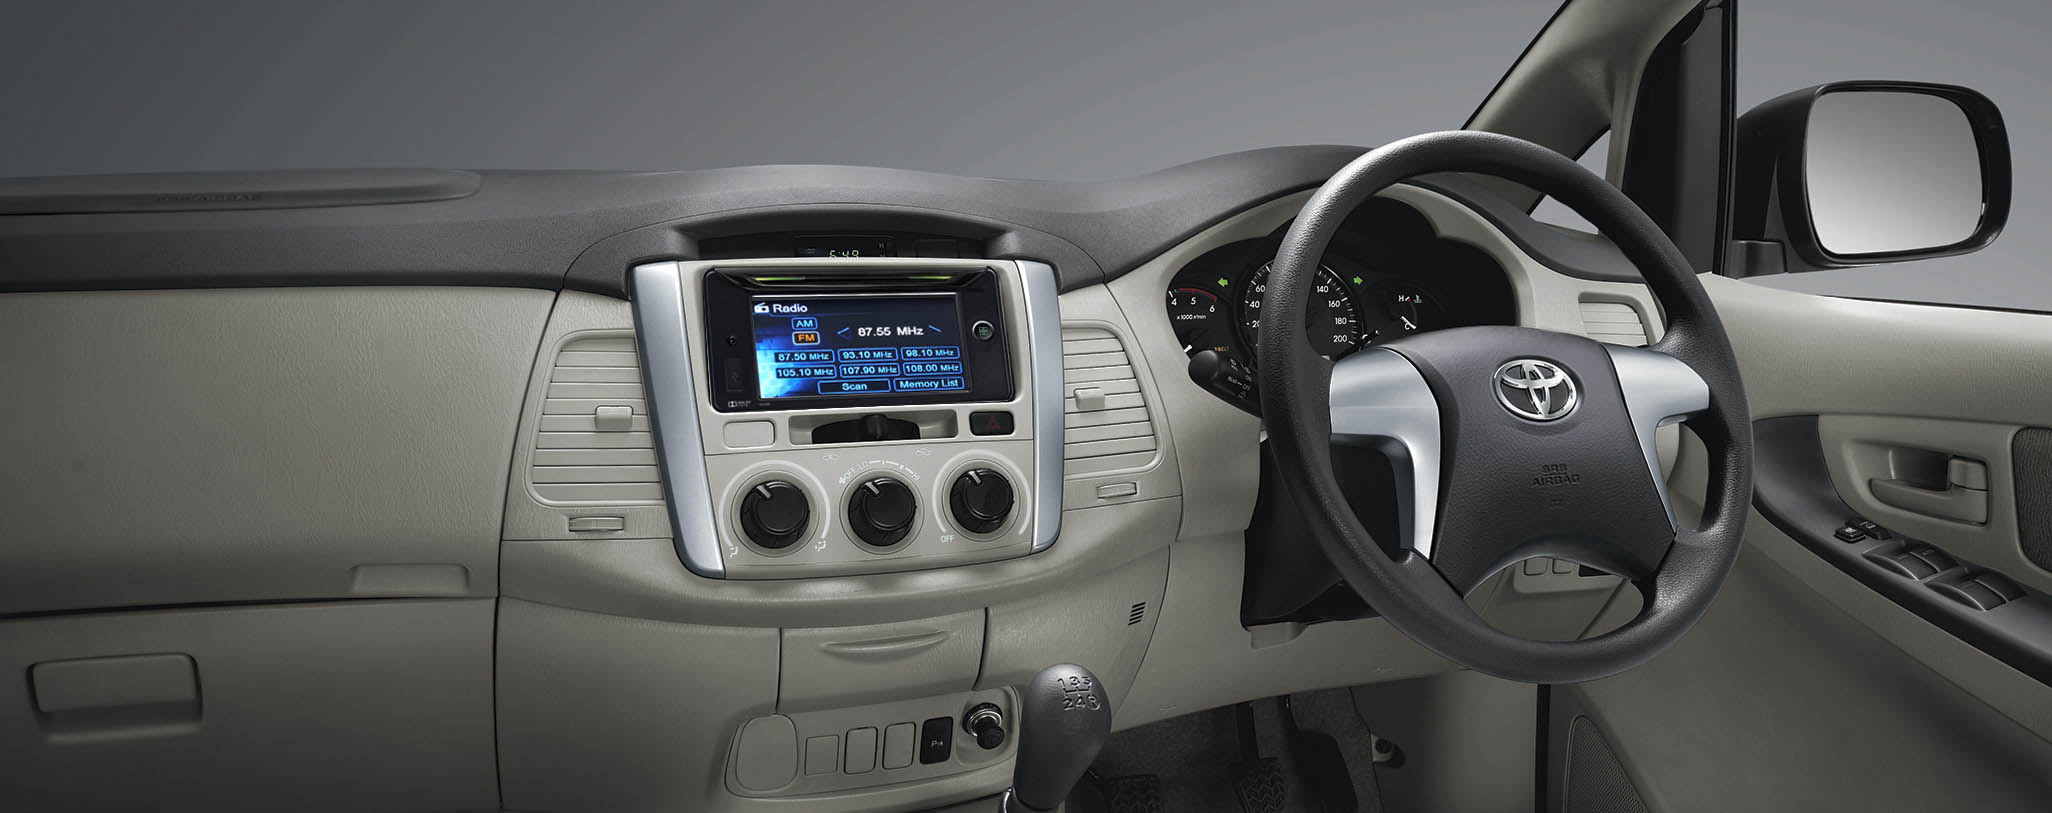 Mobil Baru, Toyota Kijang Innova 2013 Dashboard G: Nih Gambar High Resolution Foto Kijang Innova Facelift 2013